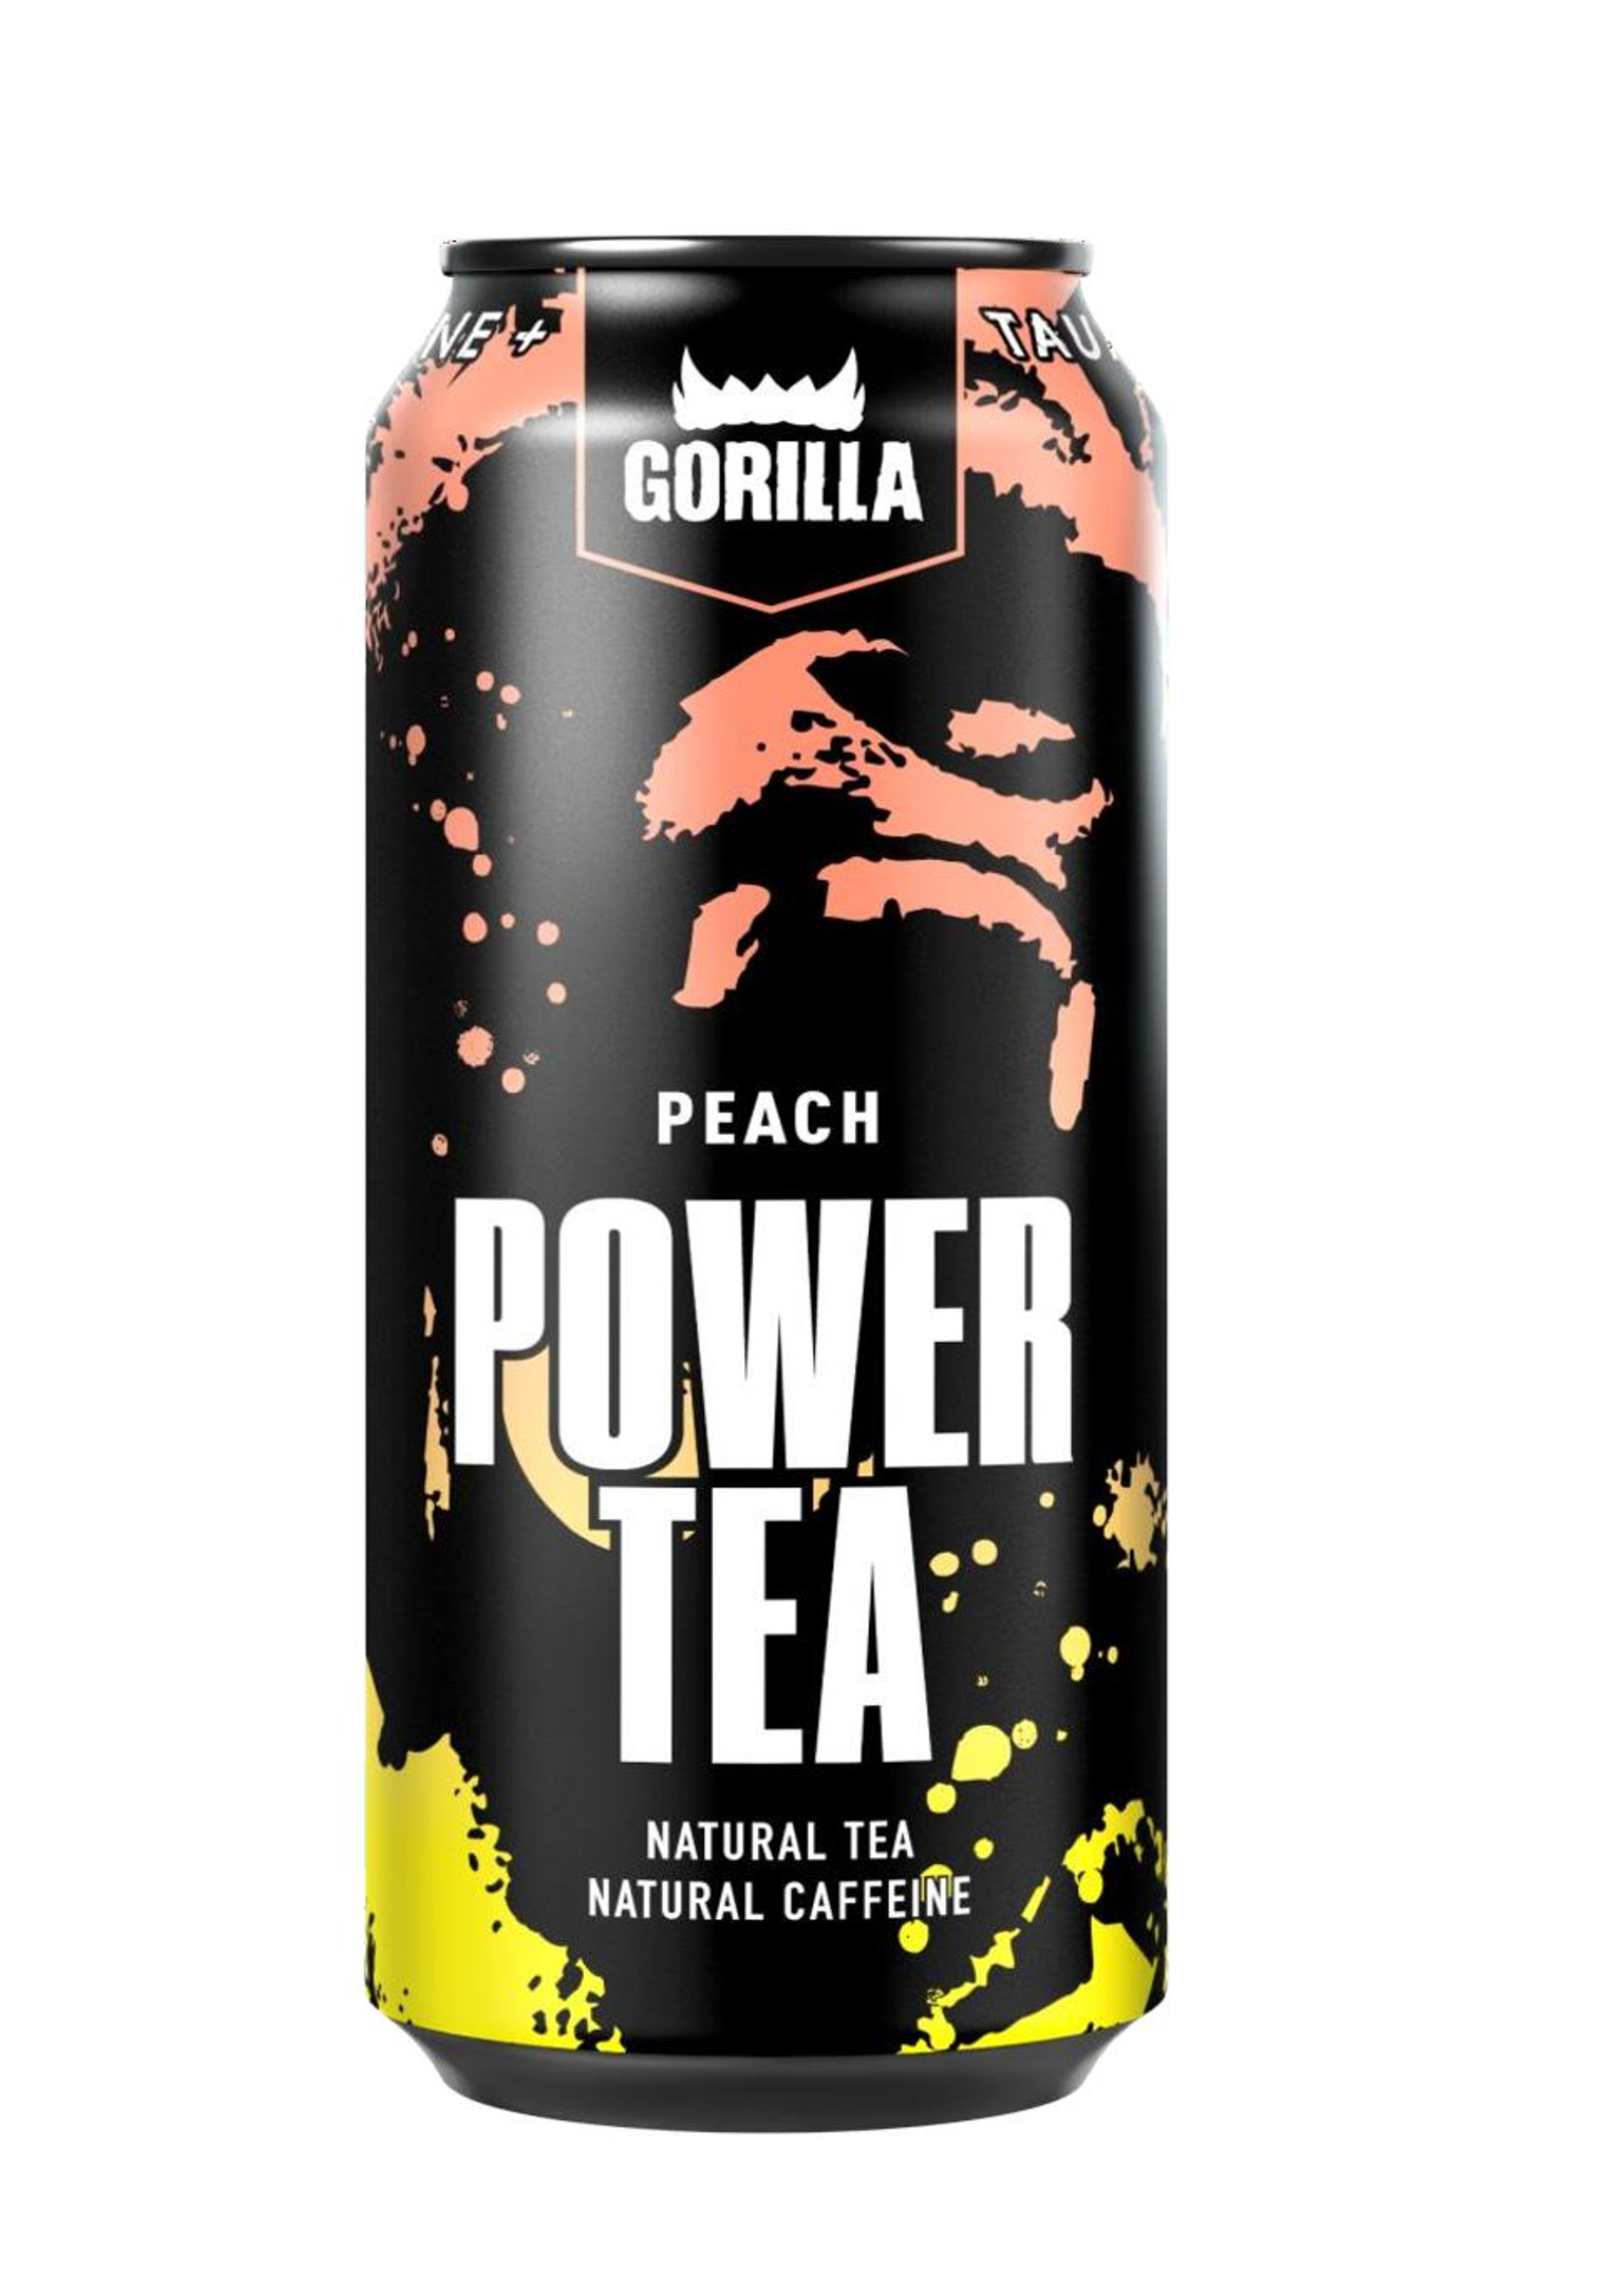 Gorilla Power Yea Peach